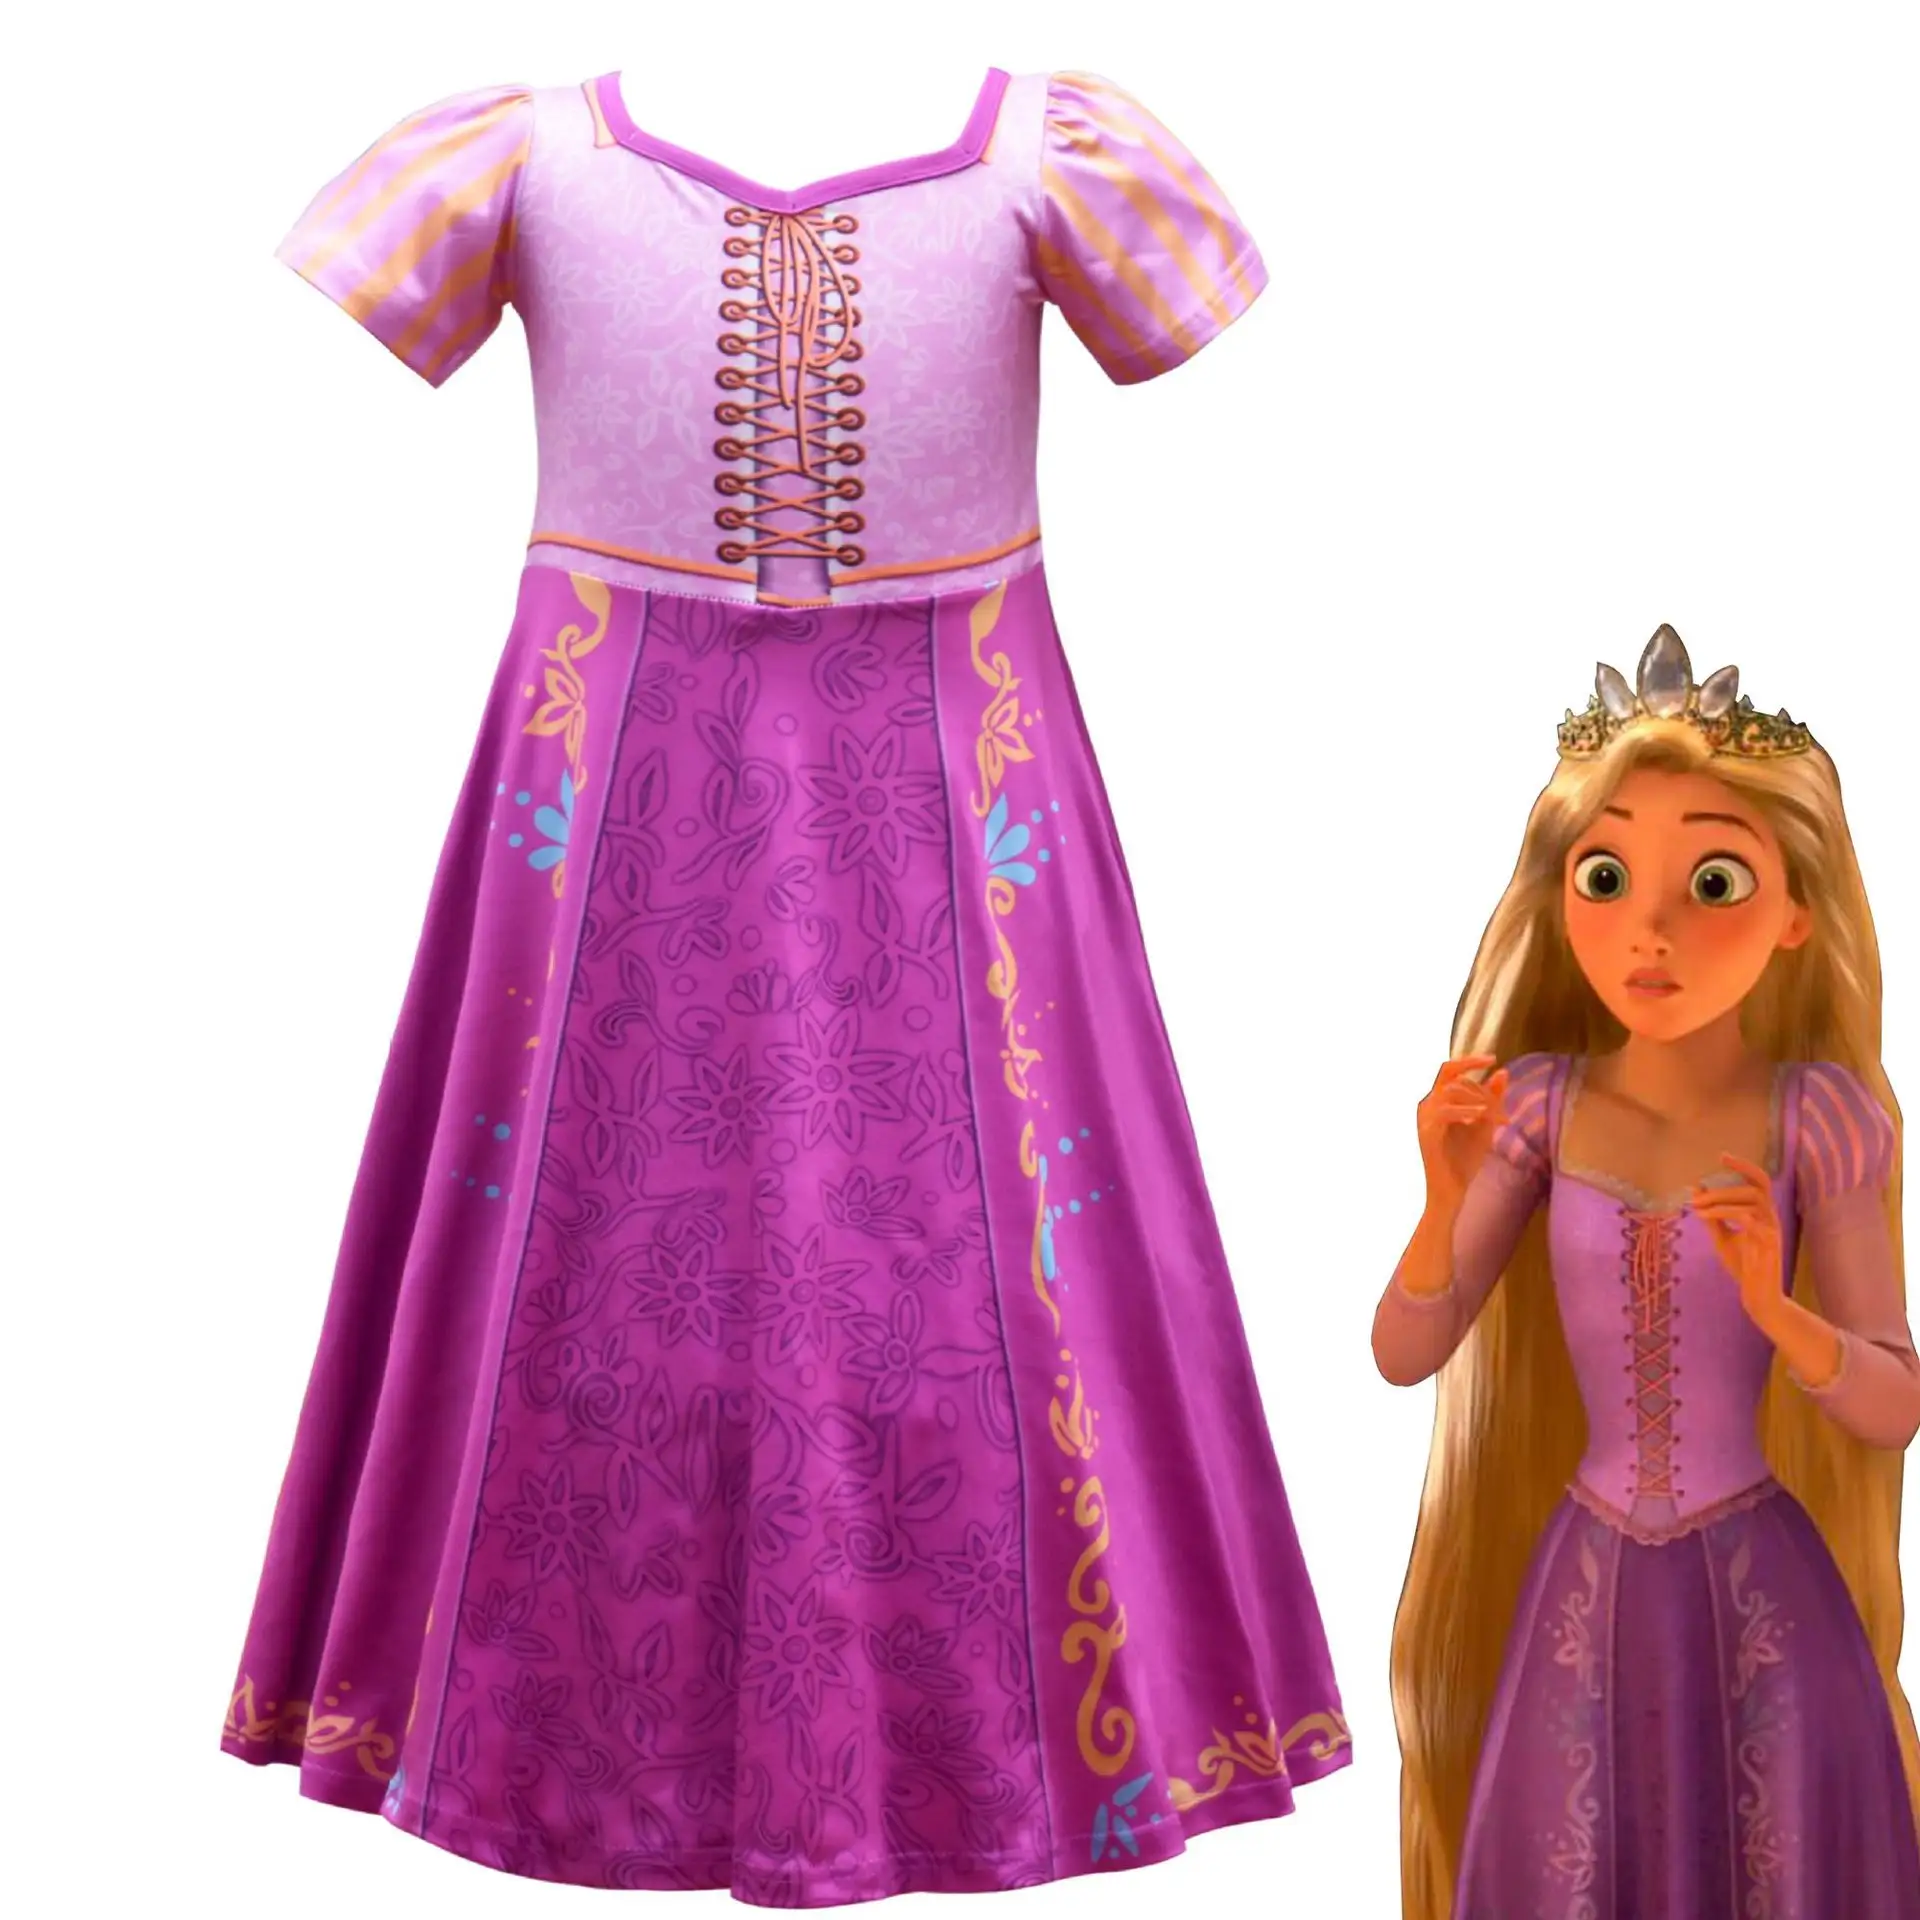 Magic hair Rapunzel cosplay dress princess dress TV & Movie cosplay costume